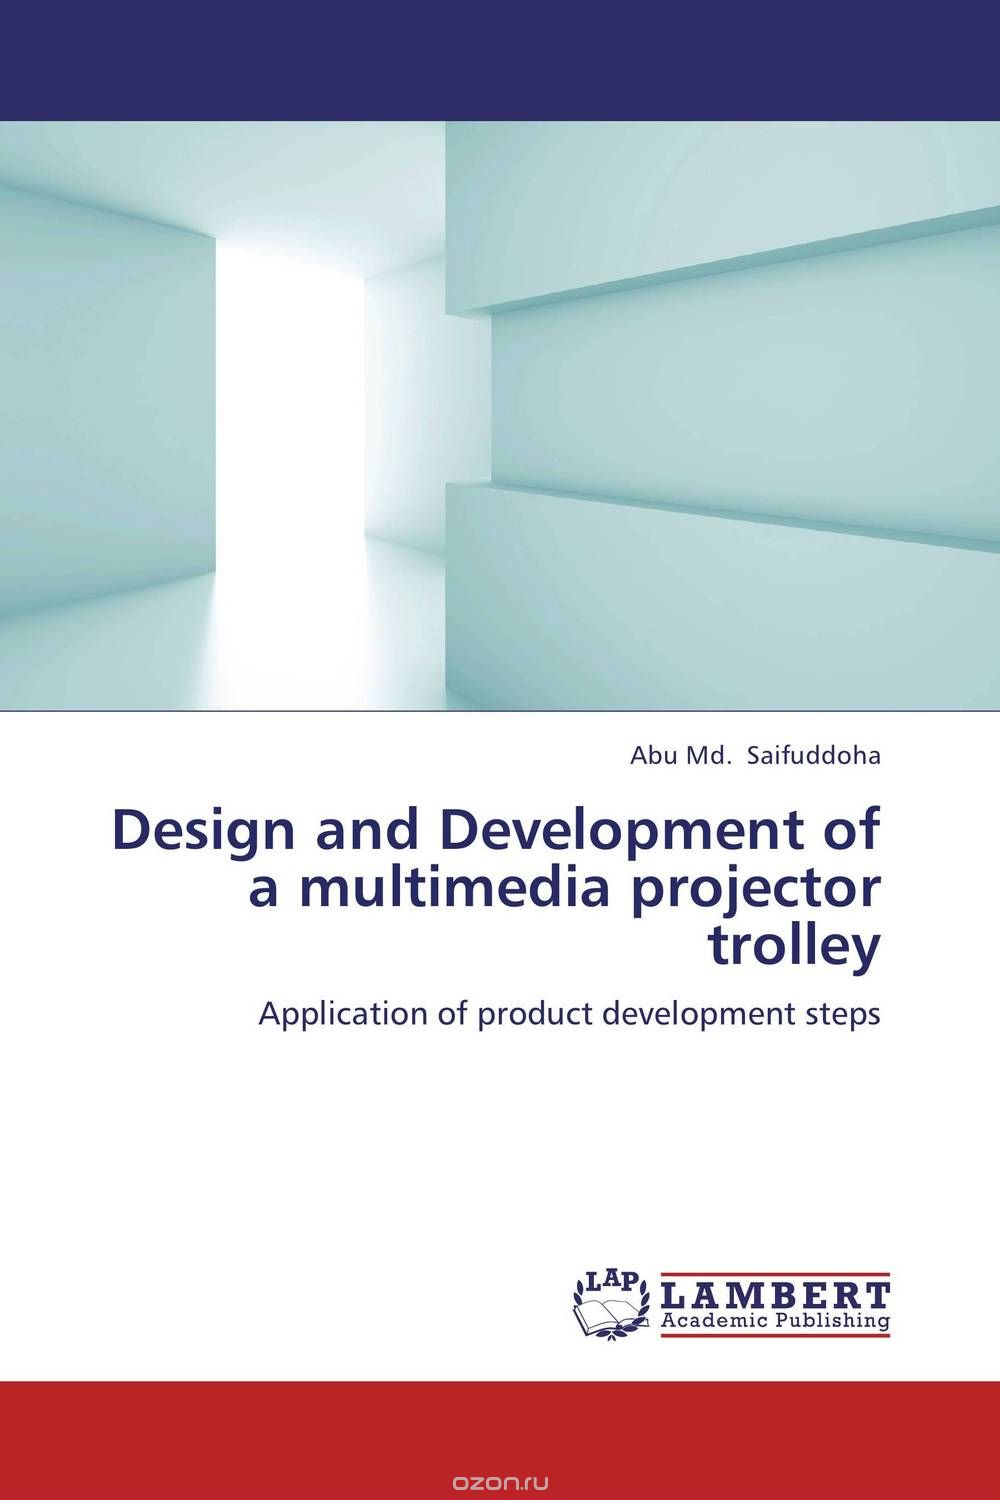 Скачать книгу "Design and Development of a multimedia projector trolley"